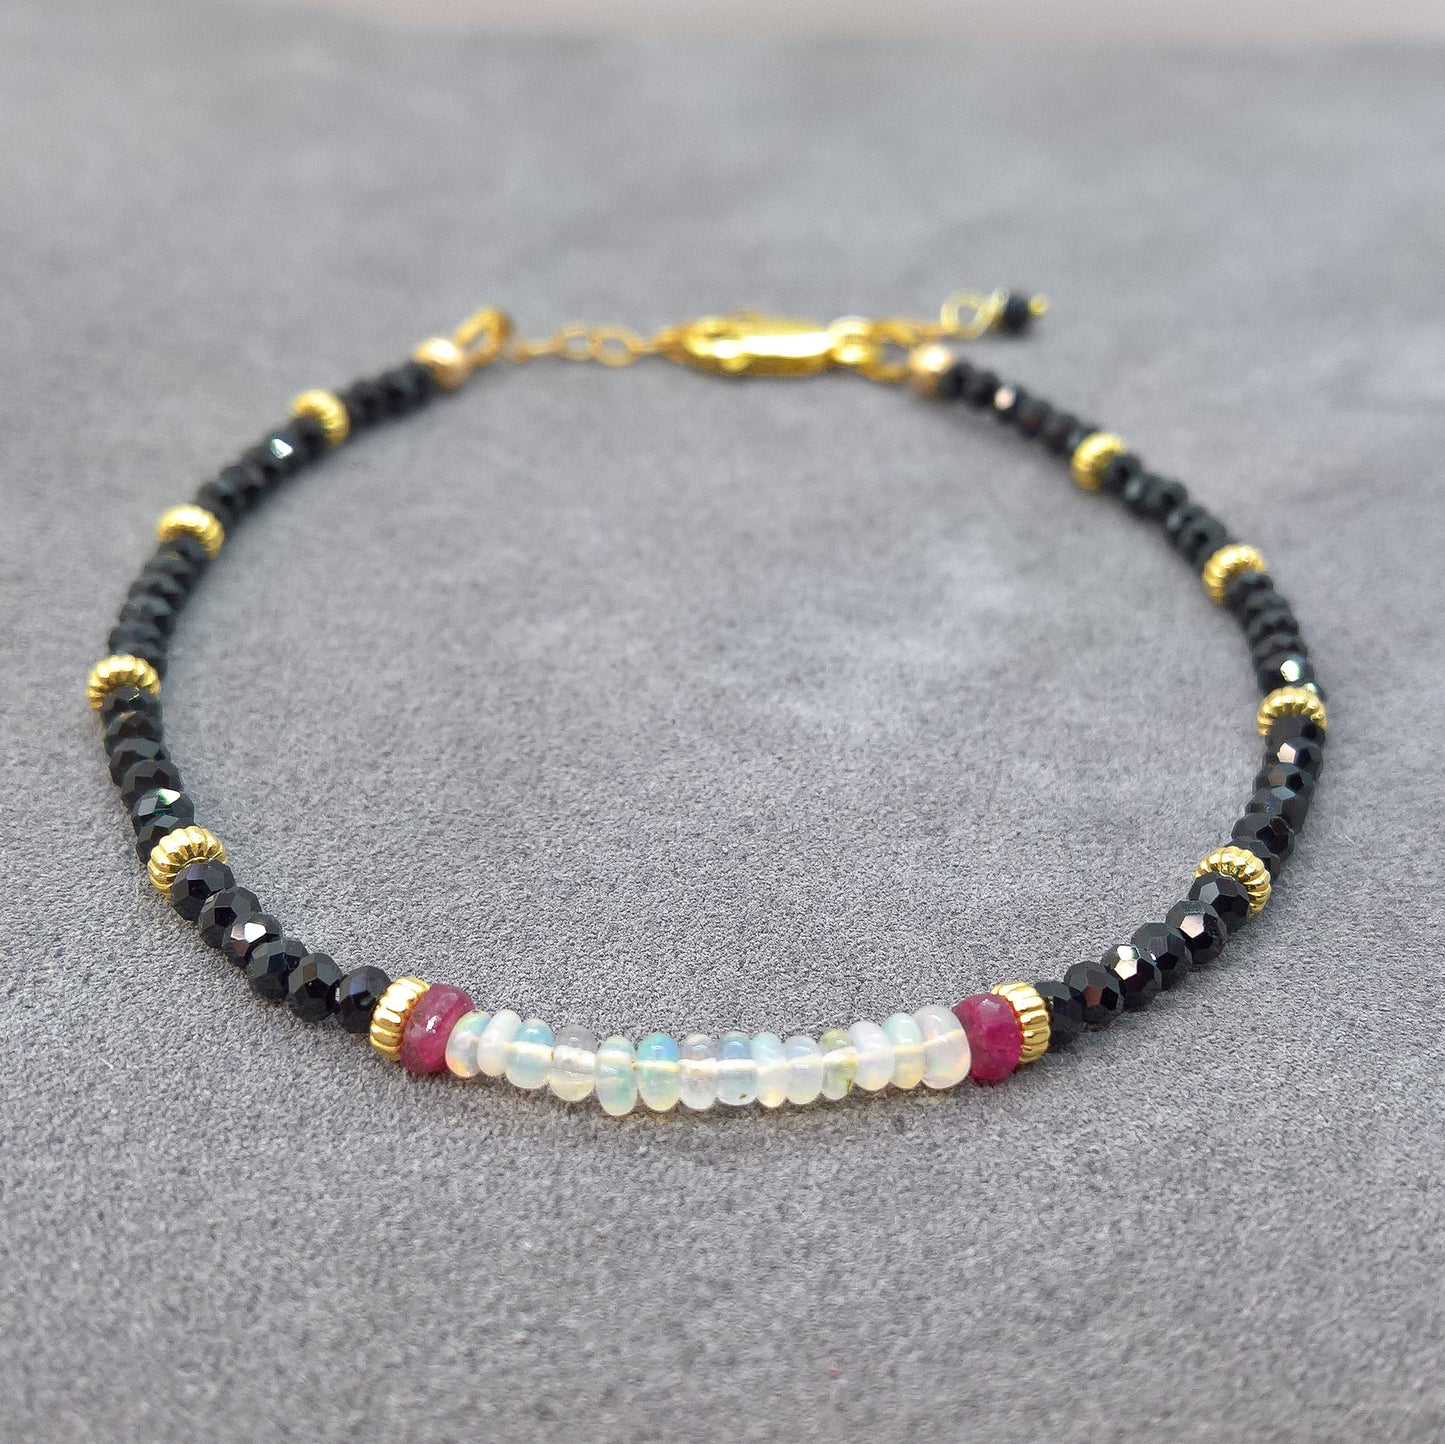 Black Spinel and opal adjustable bracelet - dainty skinny bracelet